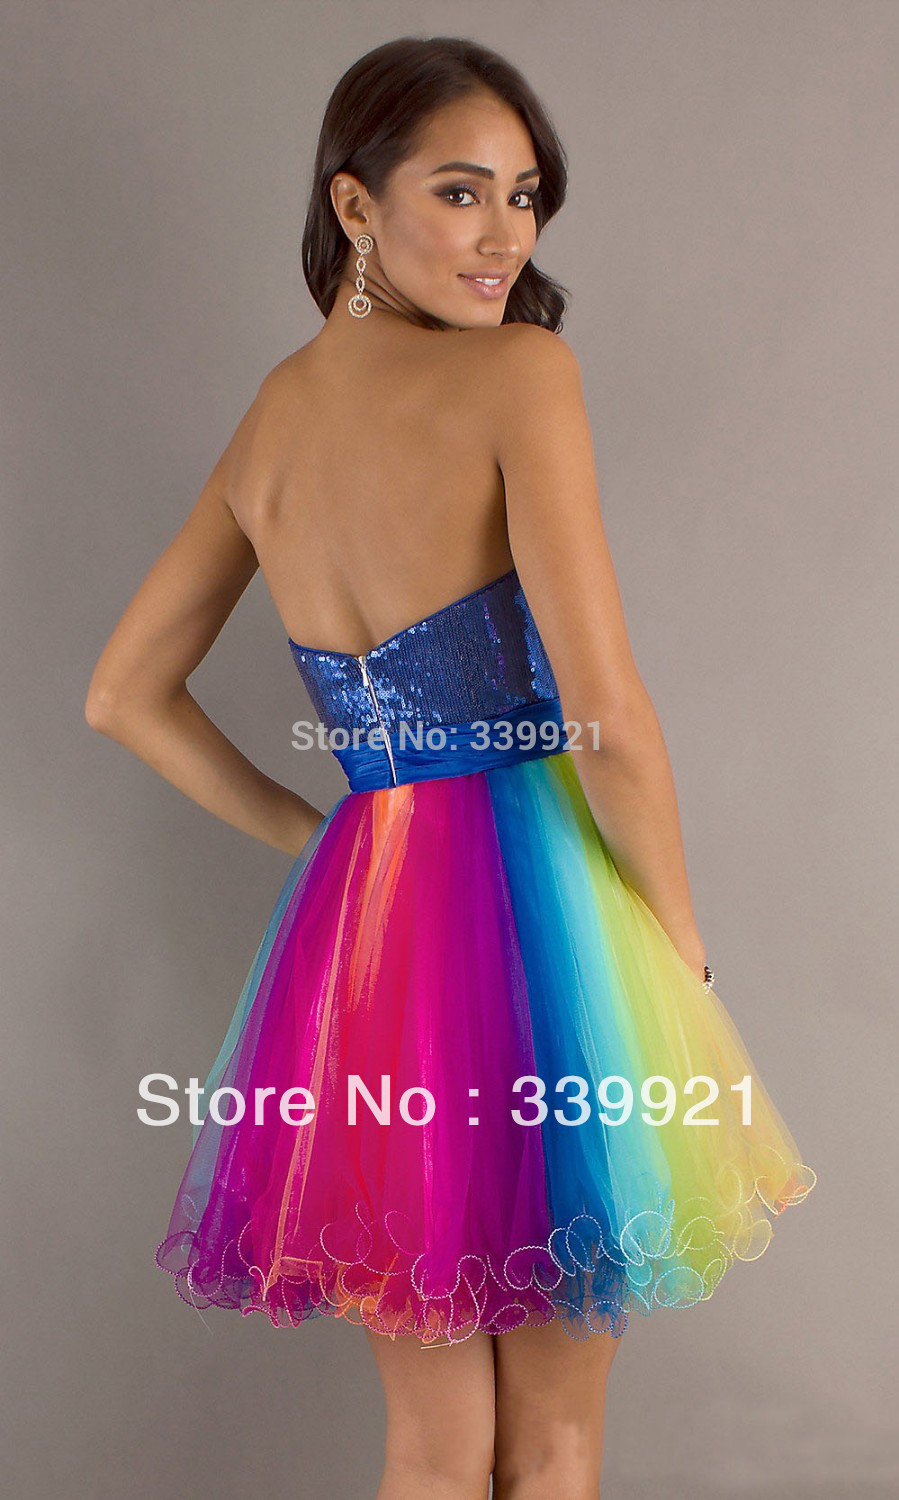 ... -Back-Short-Prom-Dress-Girl-Homecoming-Graduation-Cocktail-Dress.jpg